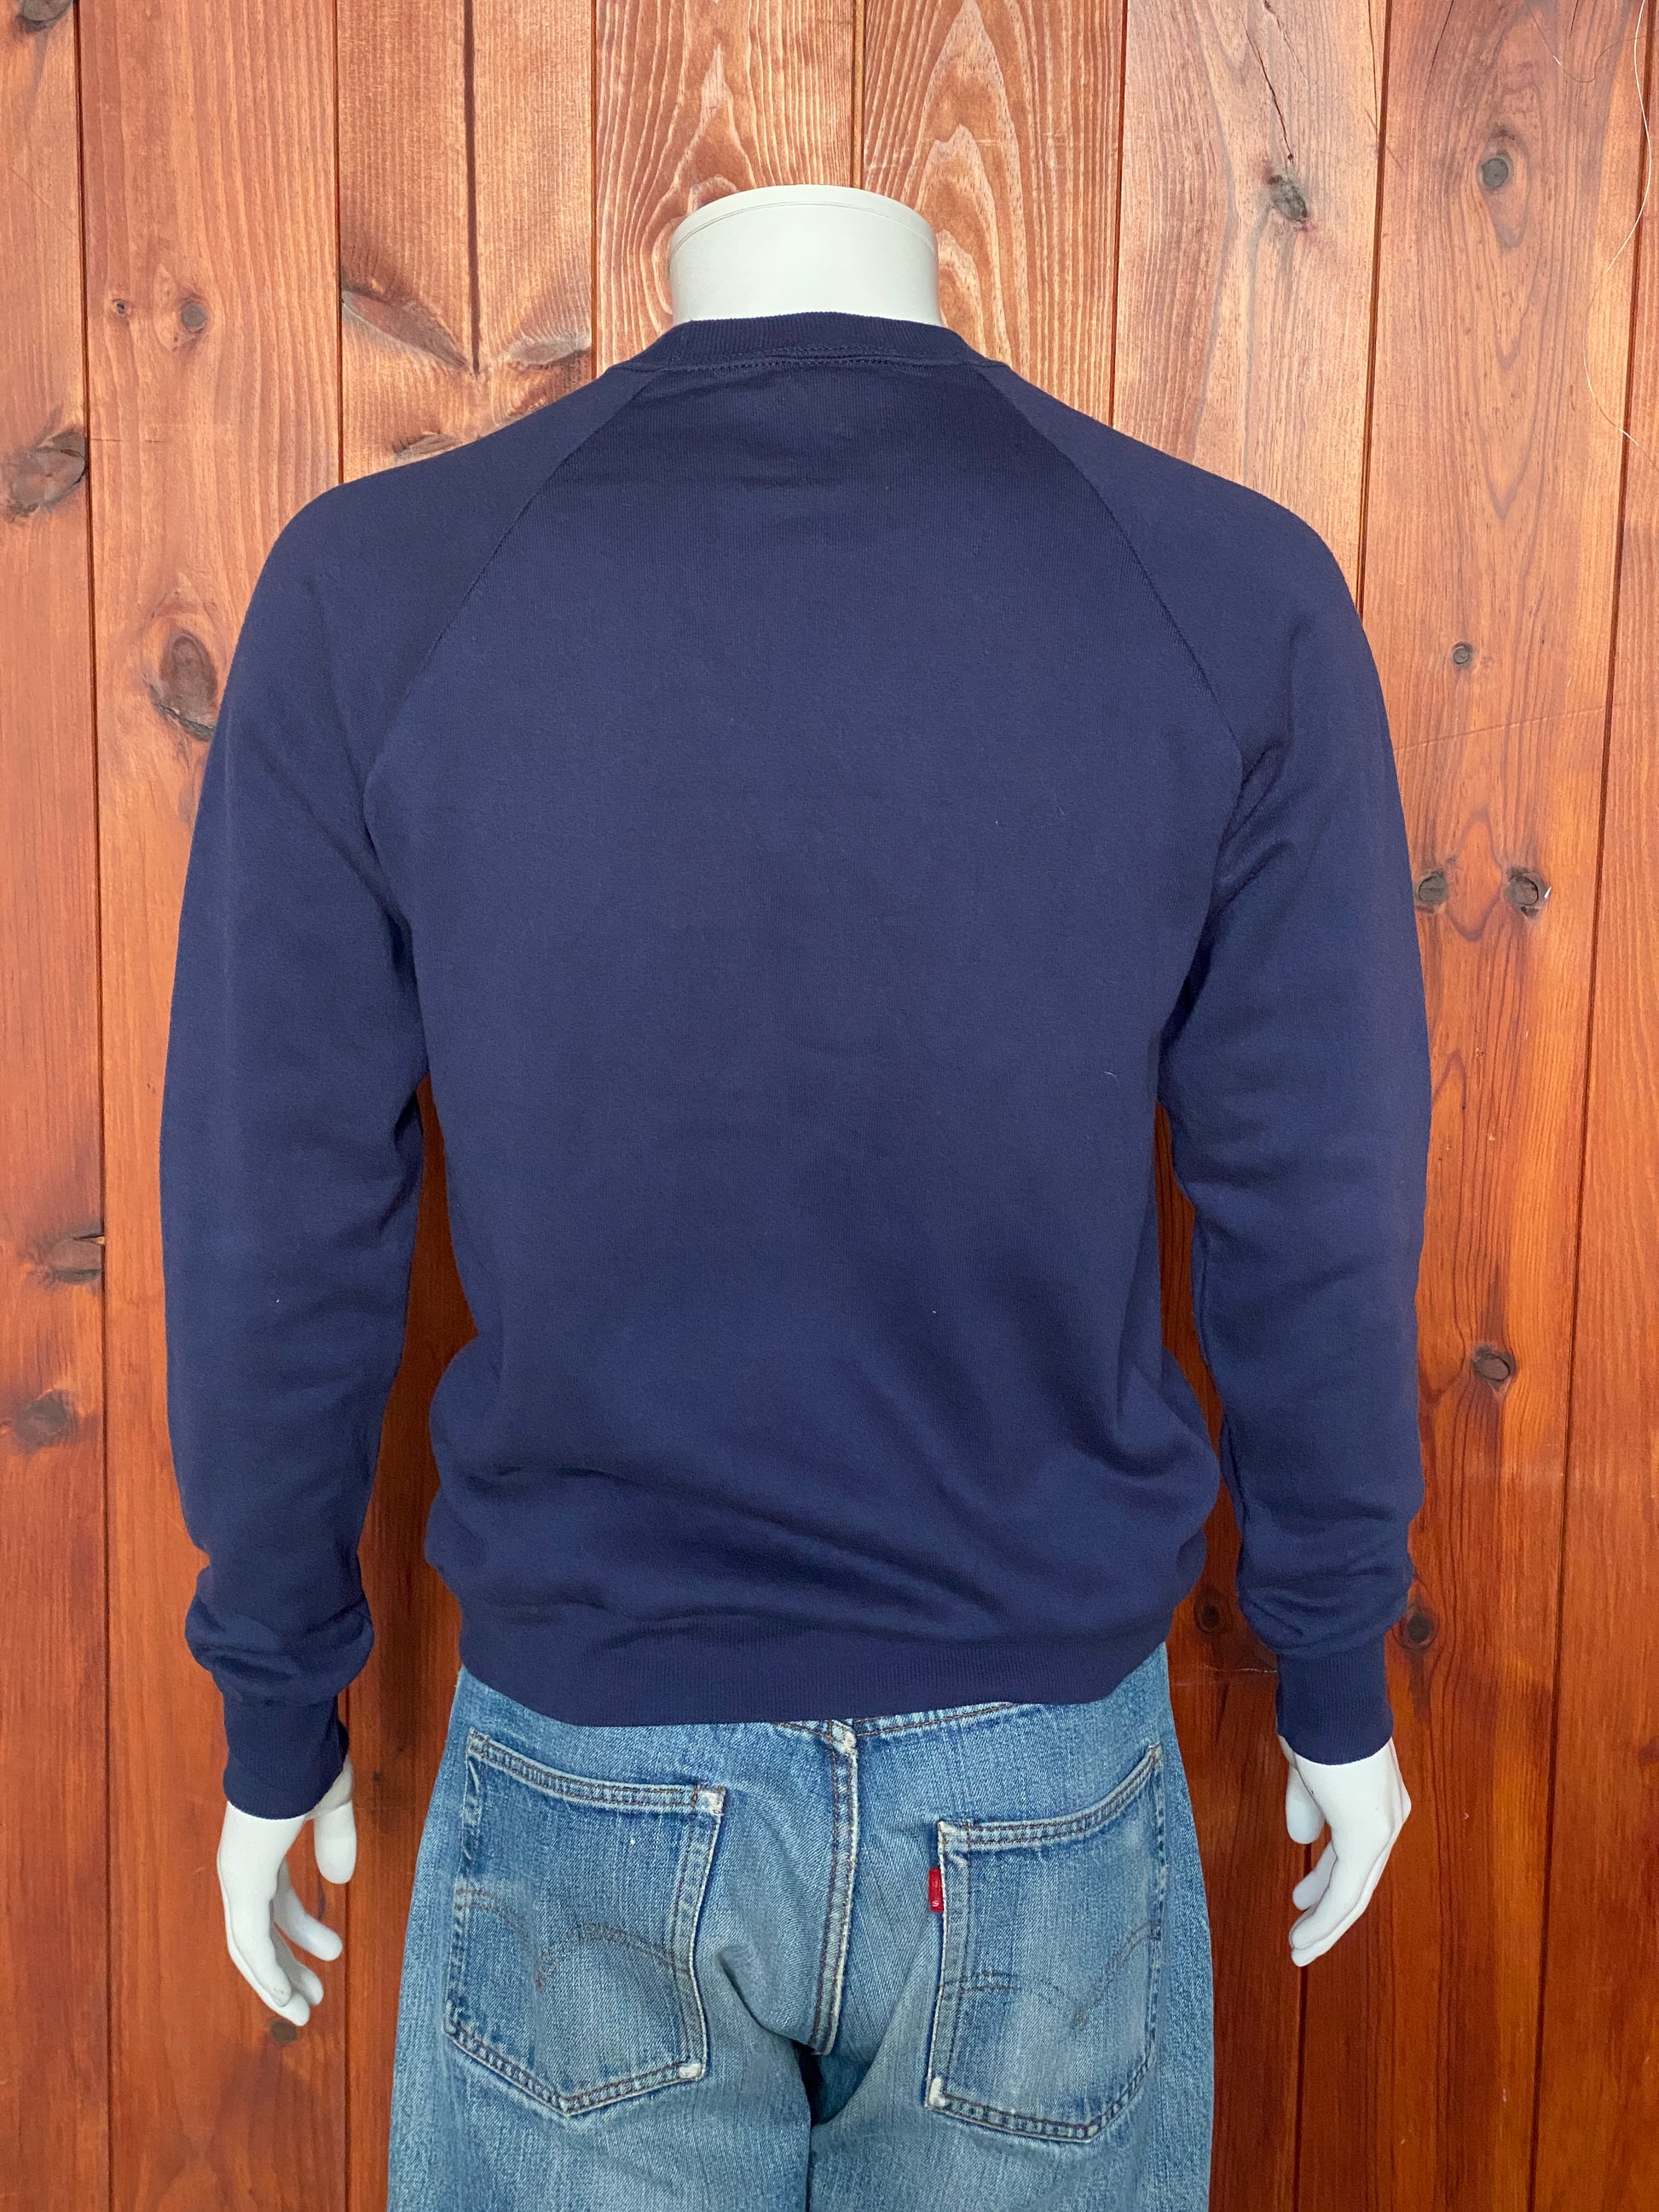 Medium 90s Vintage Aspen Sweatshirt Made In USA | Retro Apparel